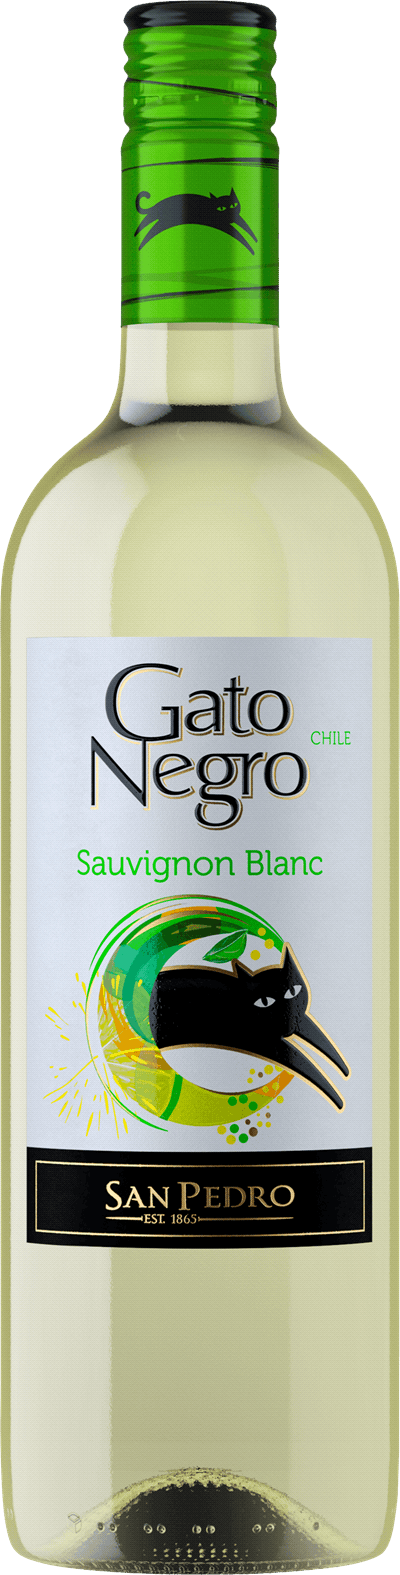 Gato Negro Sauvignon Blanc, 2021